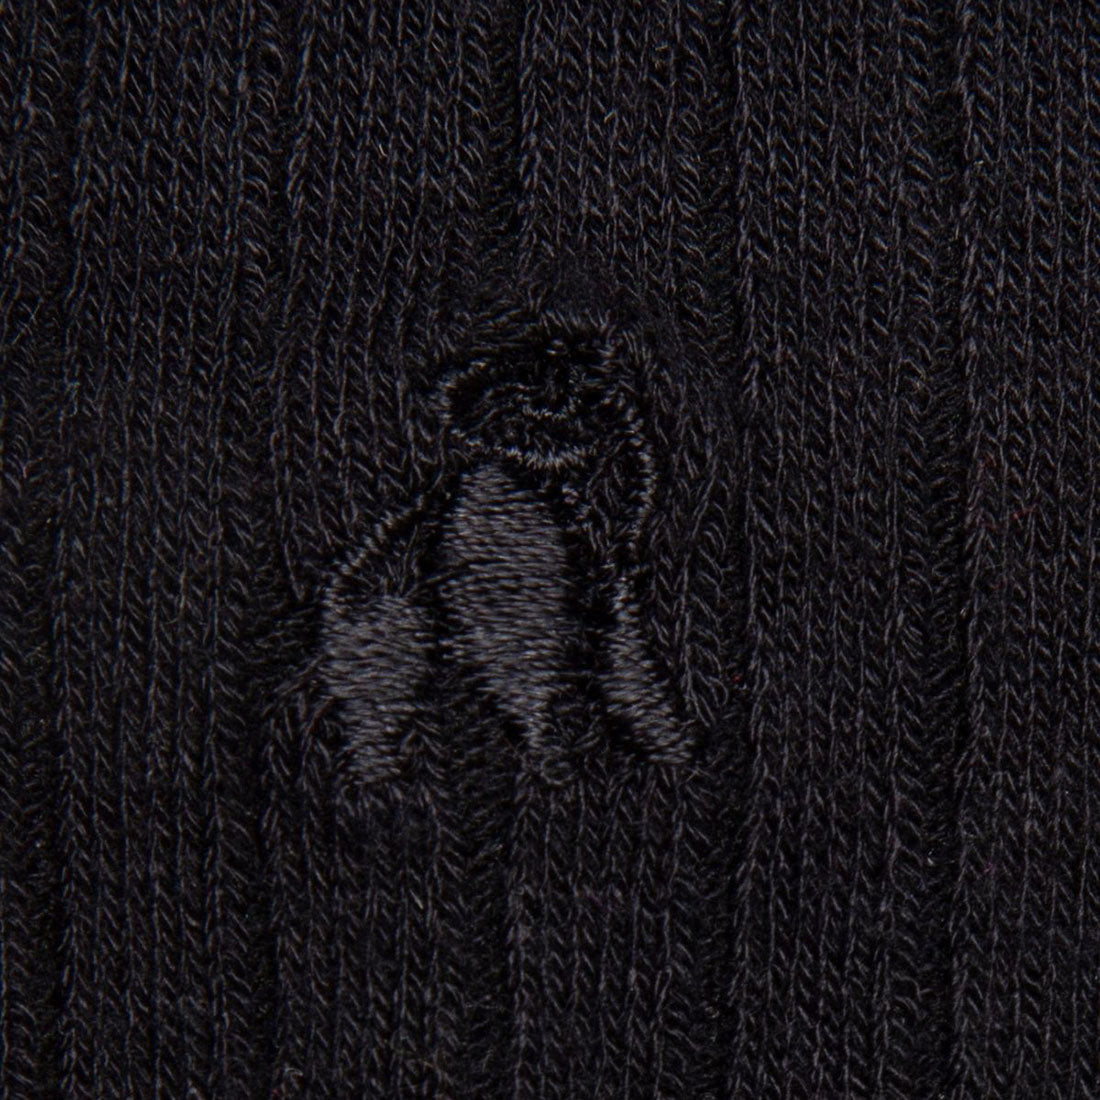 Black & Royal Blue Bamboo Sock Bundle - Four Pairs